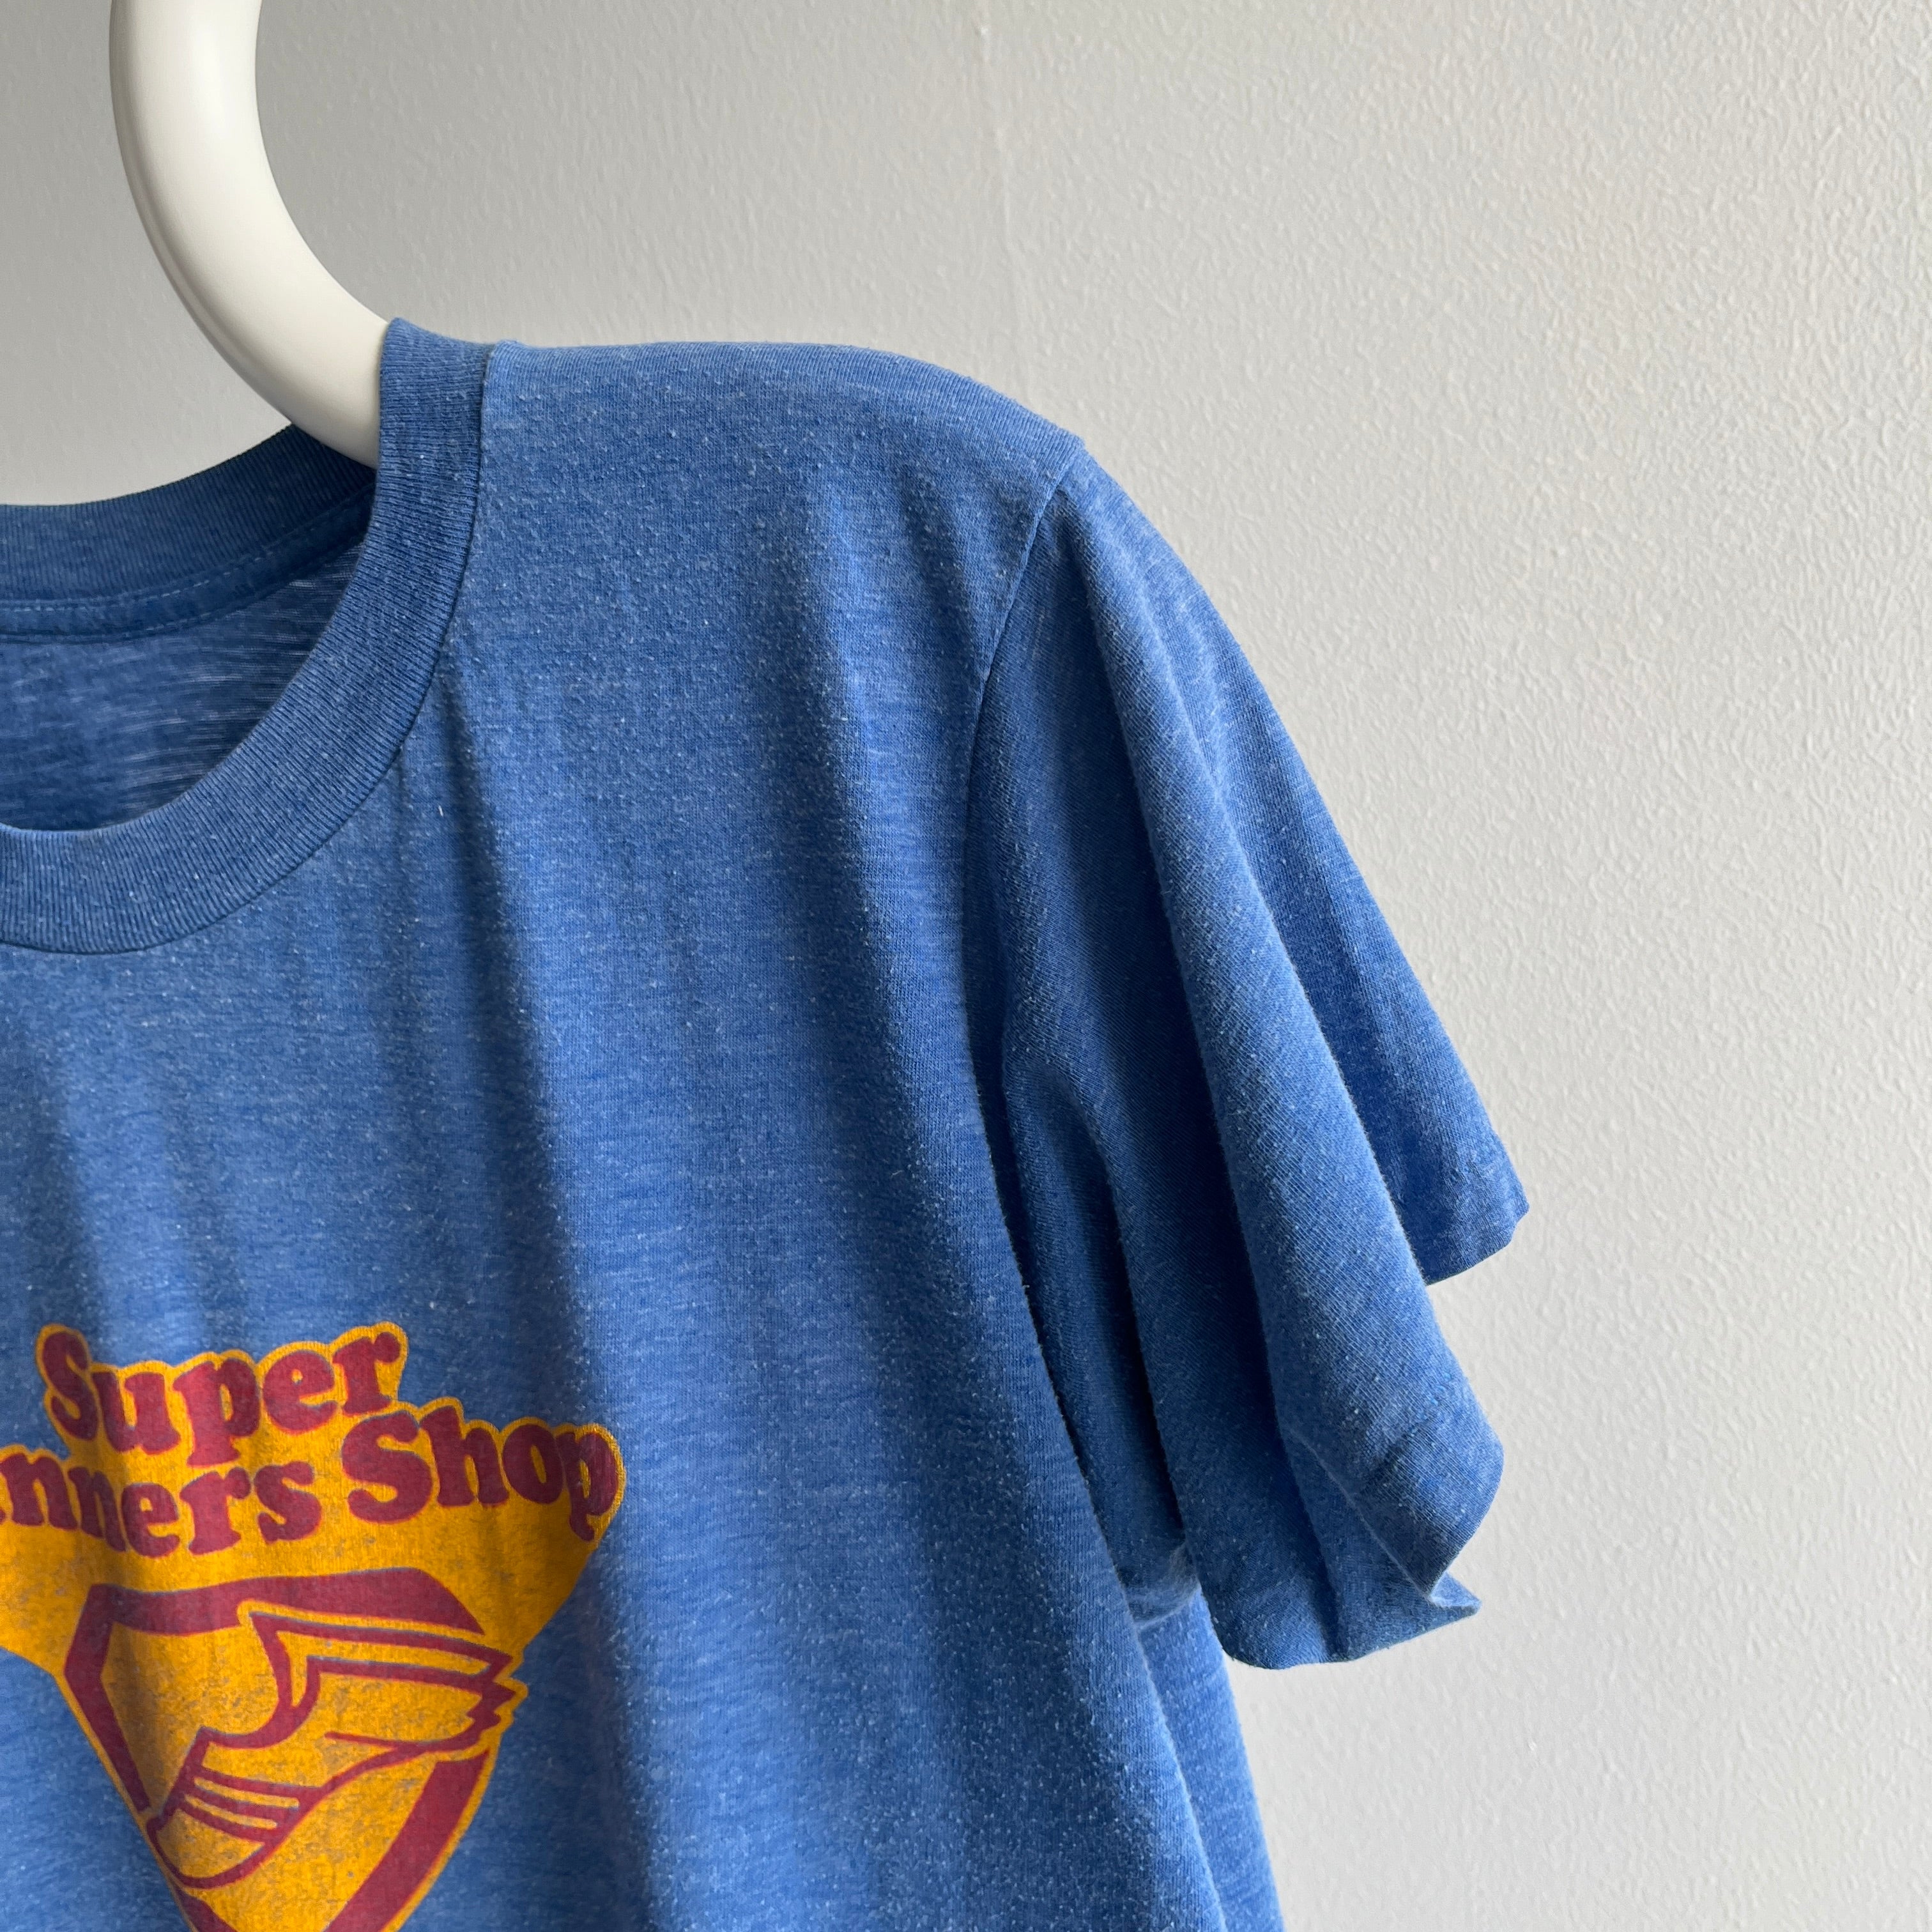 1980s Super Runner Shop Single Stitch T-Shirt